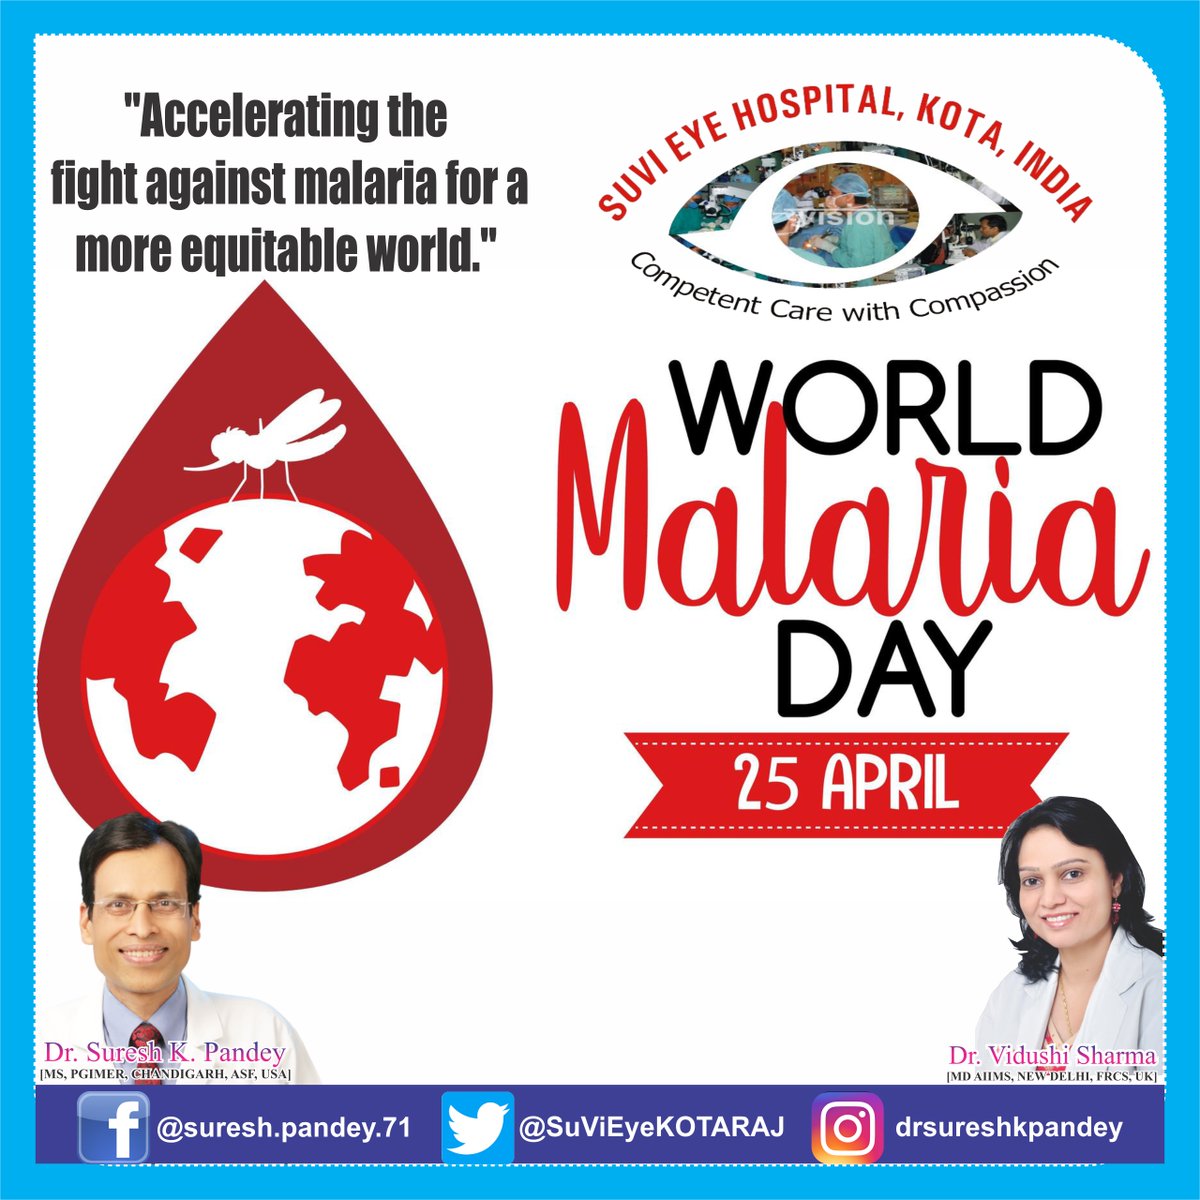 25 April - World Malaria Day

The theme for World Malaria Day is 'Accelerating the fight against malaria for a more equitable world.'.

#WorldMalariaDay 
#DrSureshKPandeyKota
#DrVidushiSharmaKota
#SuViEyeHospitalKota
#SuViEyeHospitalLasikLaserCenterKota